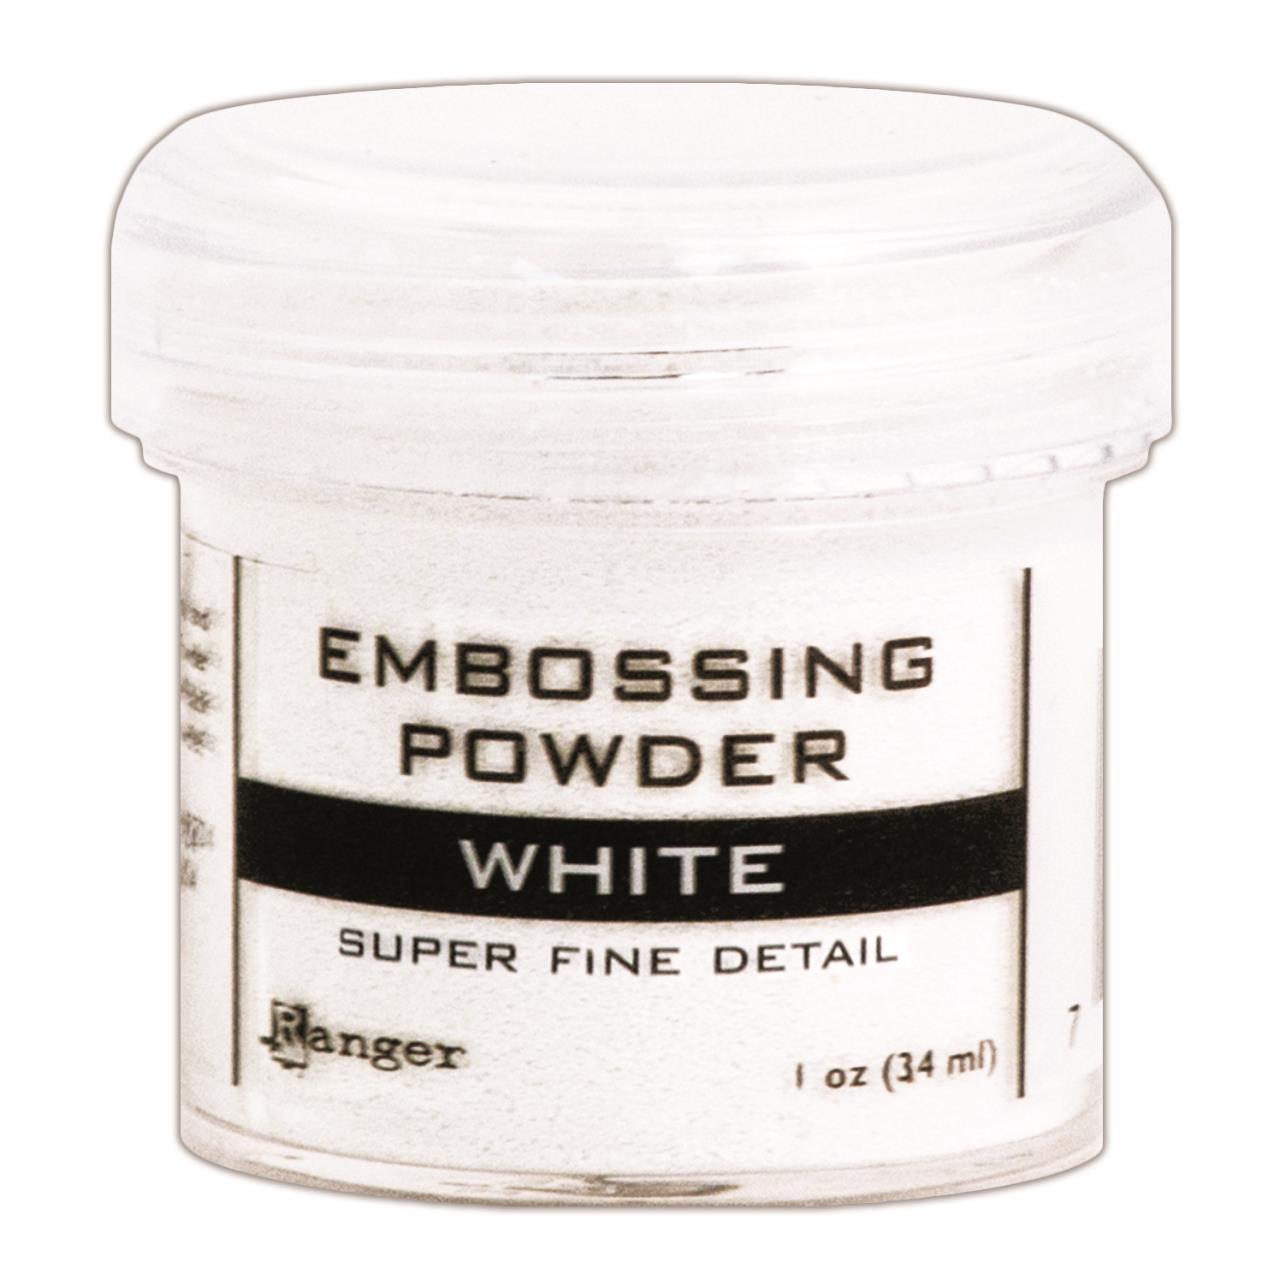 White Embossing Powder / Polvos de Realce Blanco